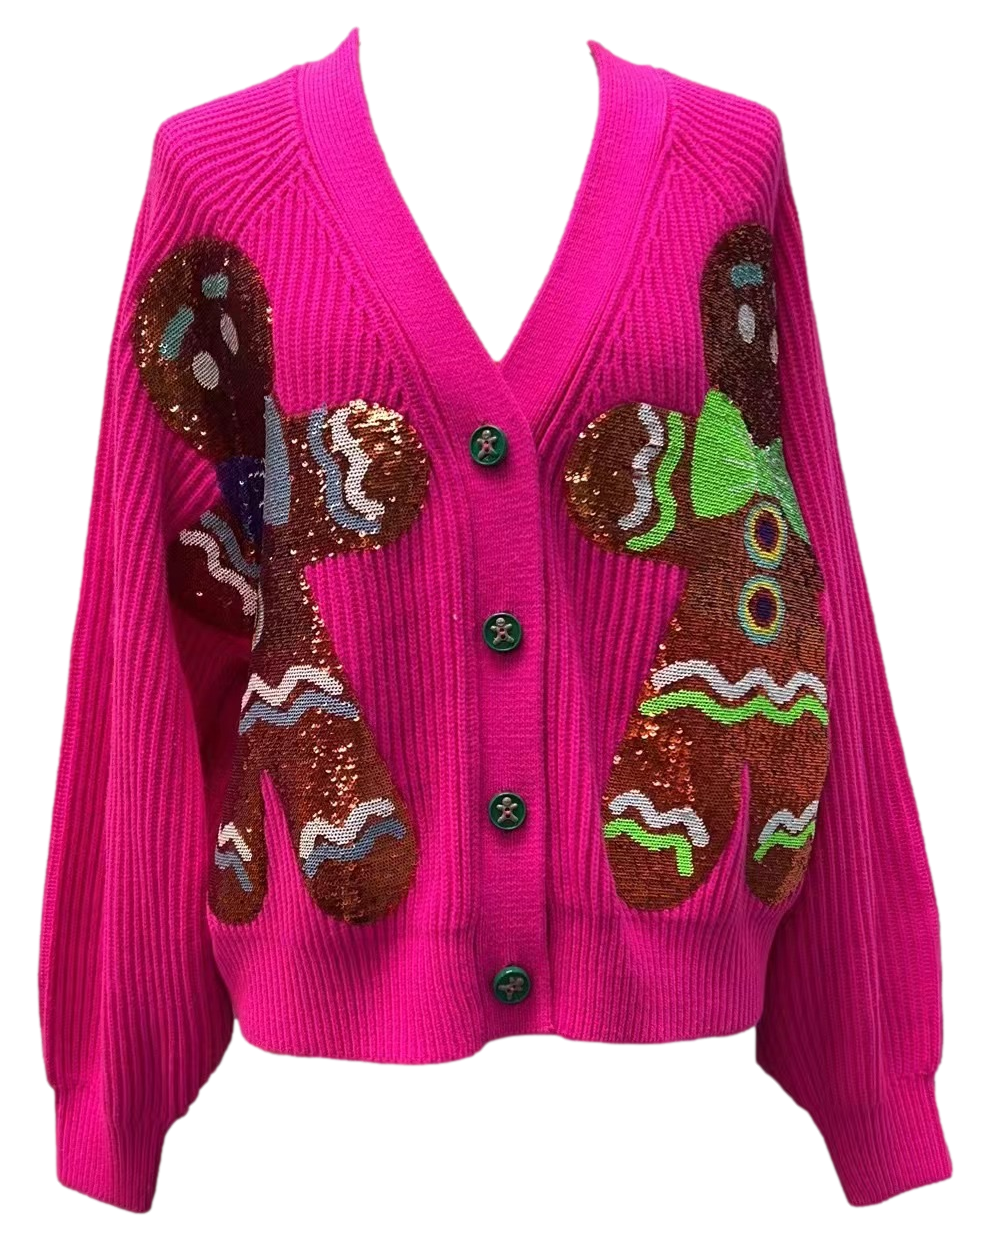 Queen of Sparkles Hot Pink Gingerbread Cardigan at ooh la la! in Grapevine TX 76051